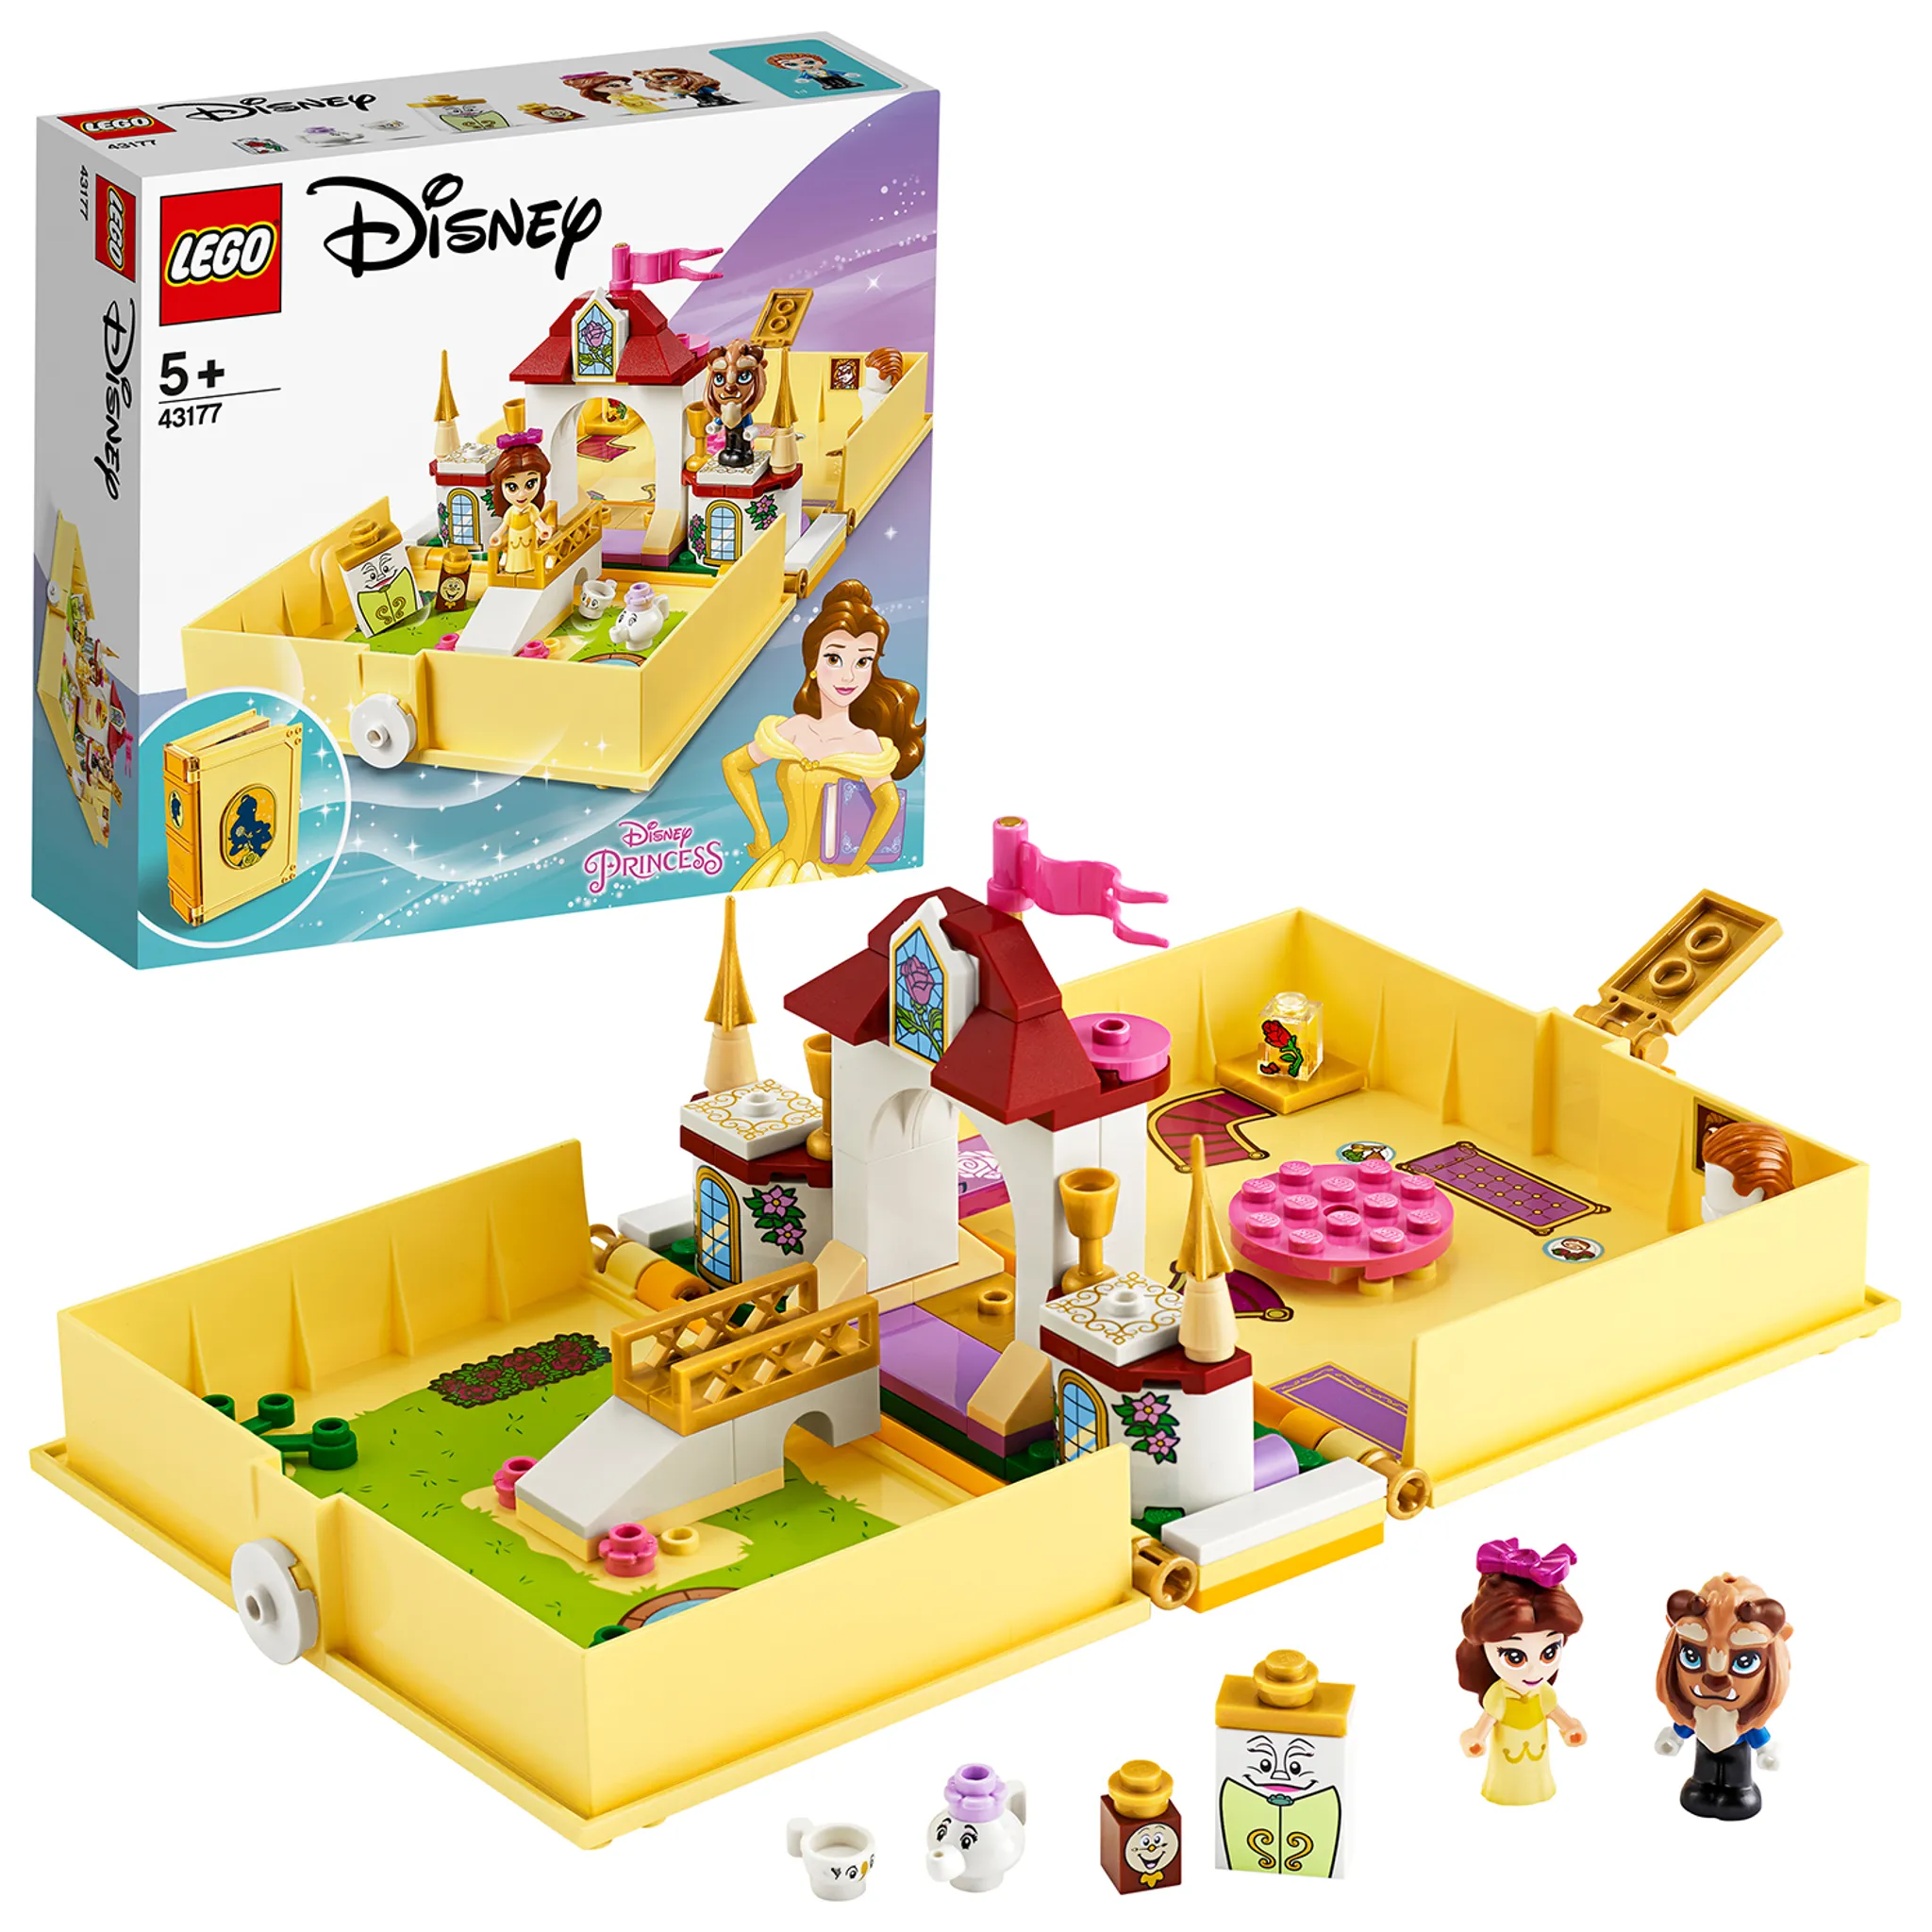 Belles Princess Disney LEGO 43177